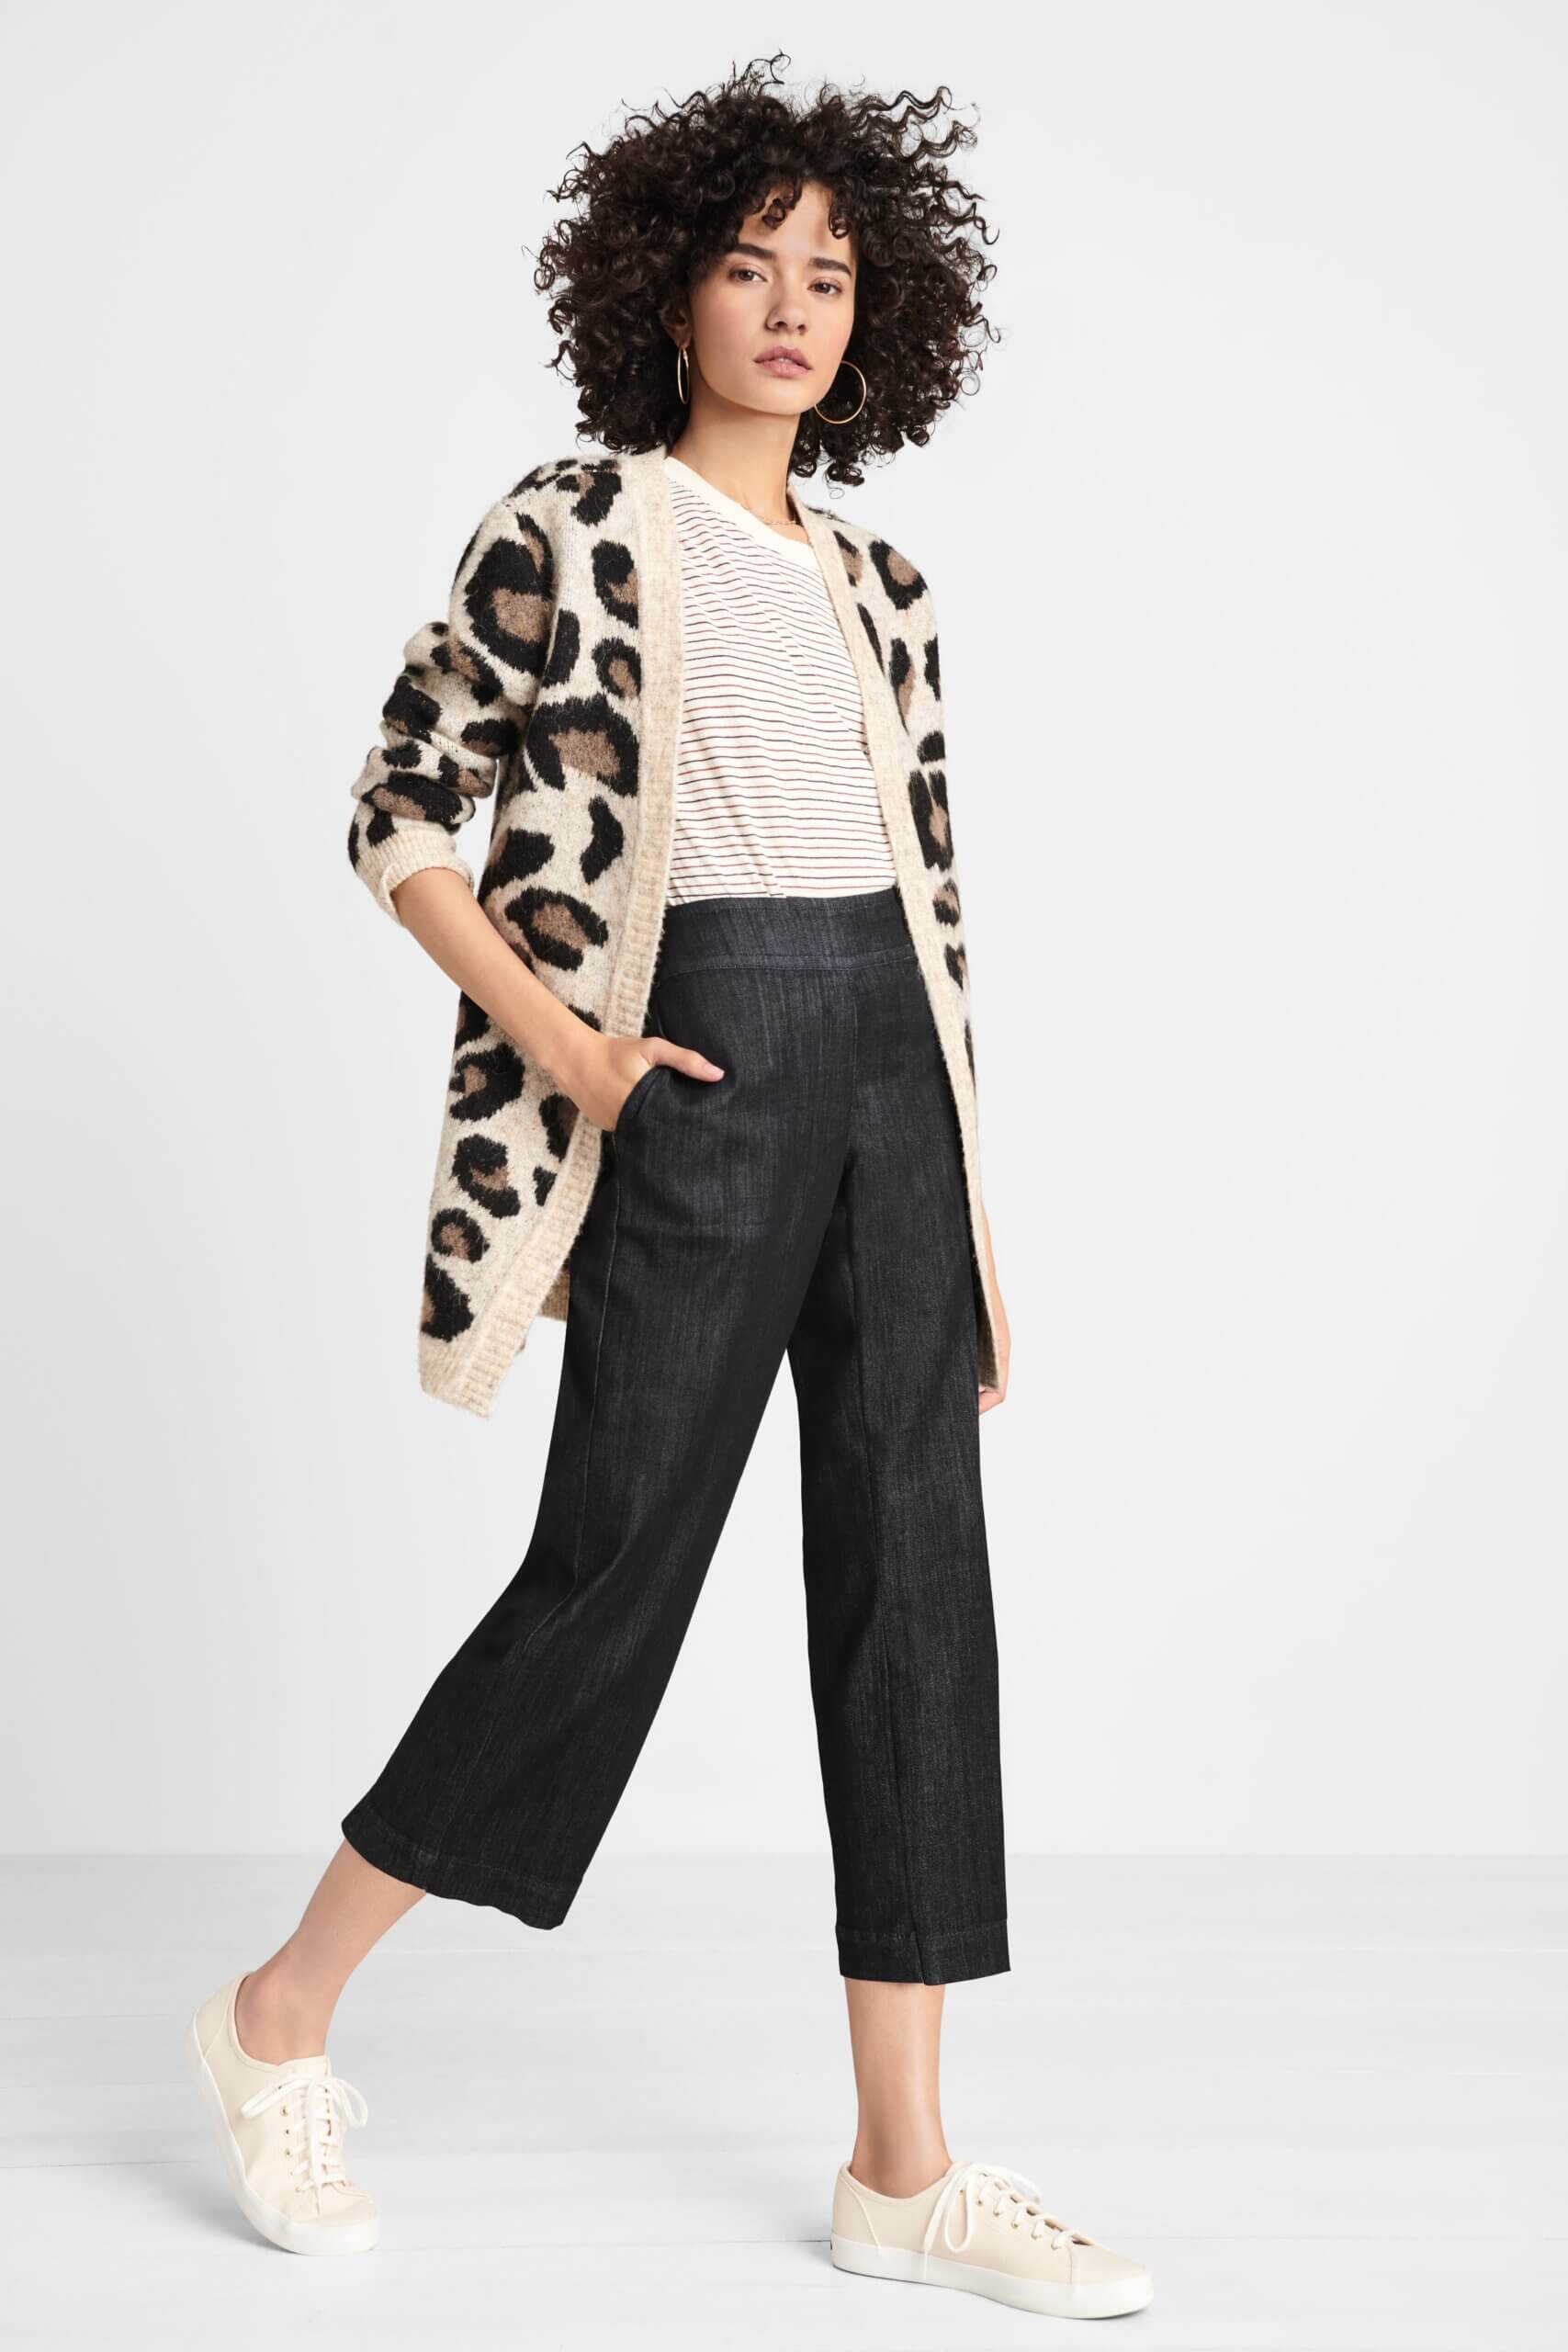 Stitch Fix women's model wearing black wide-leg cropped denim, cream striped tee, leopard print cardigan and white sneakers. 